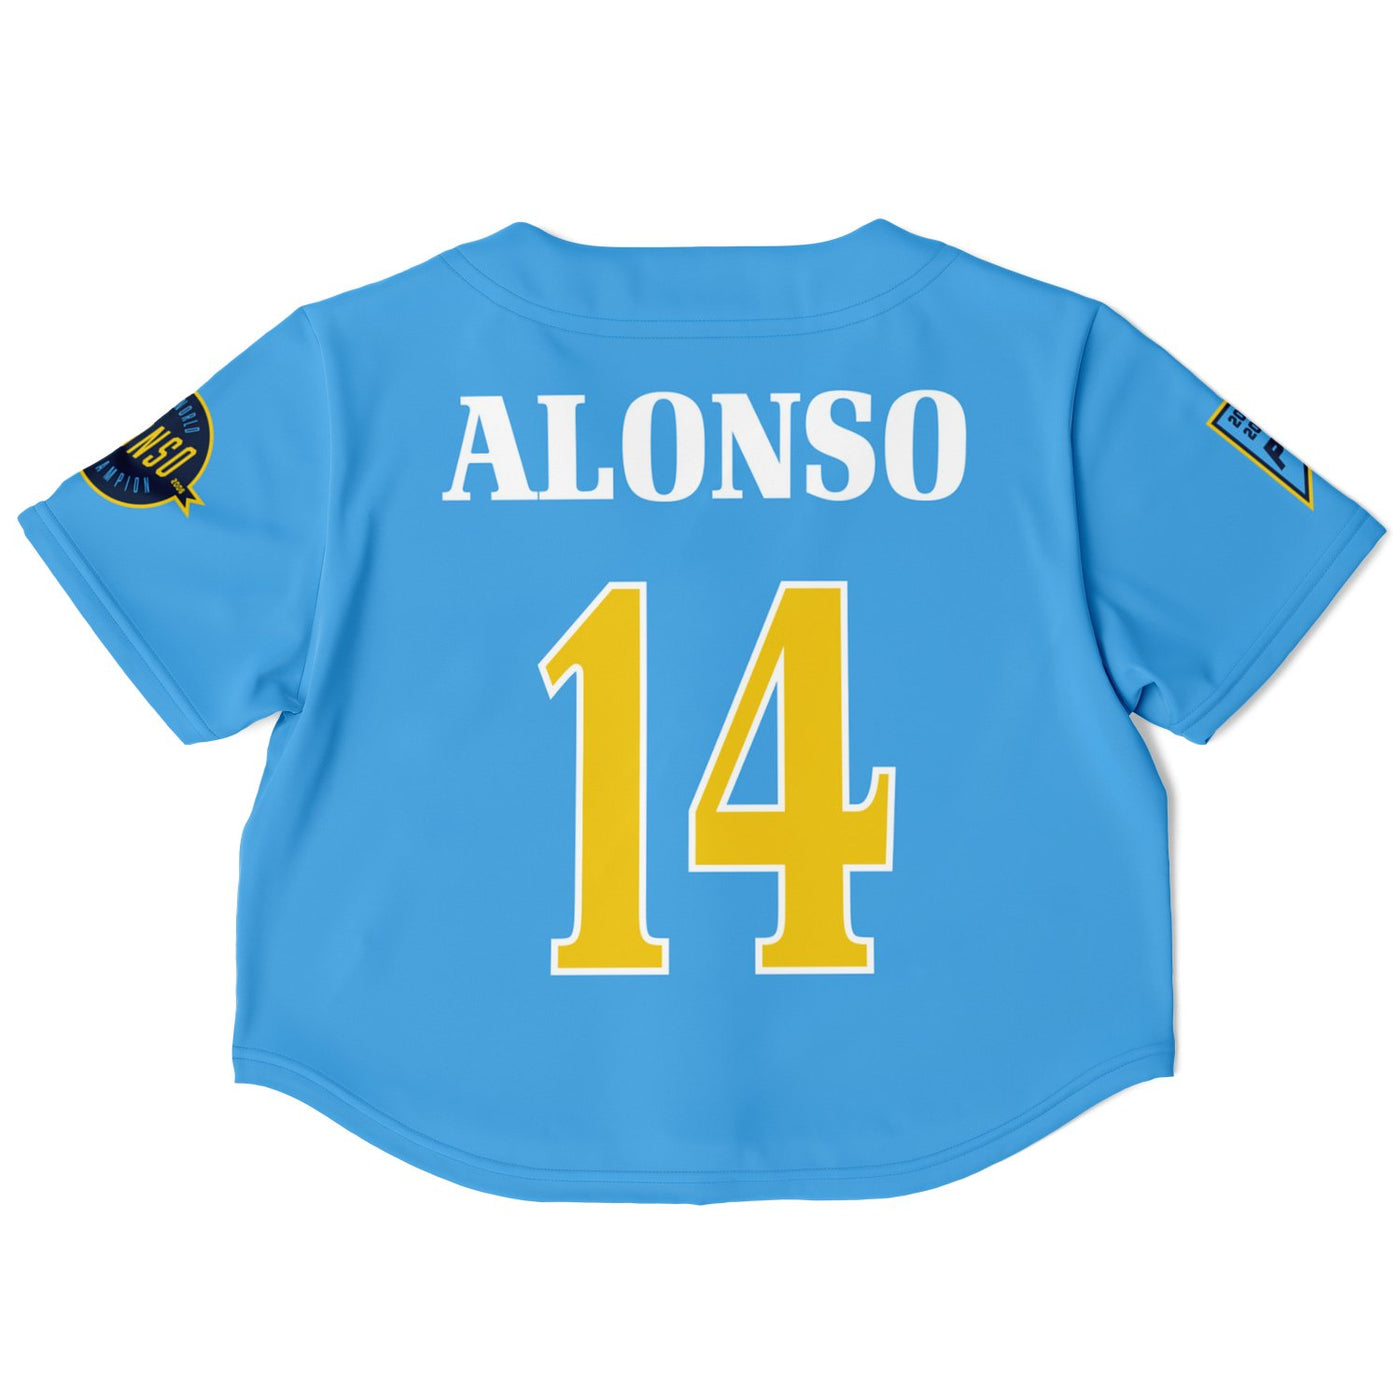 Alonso - 06' Crop Top Jersey - Furious Motorsport